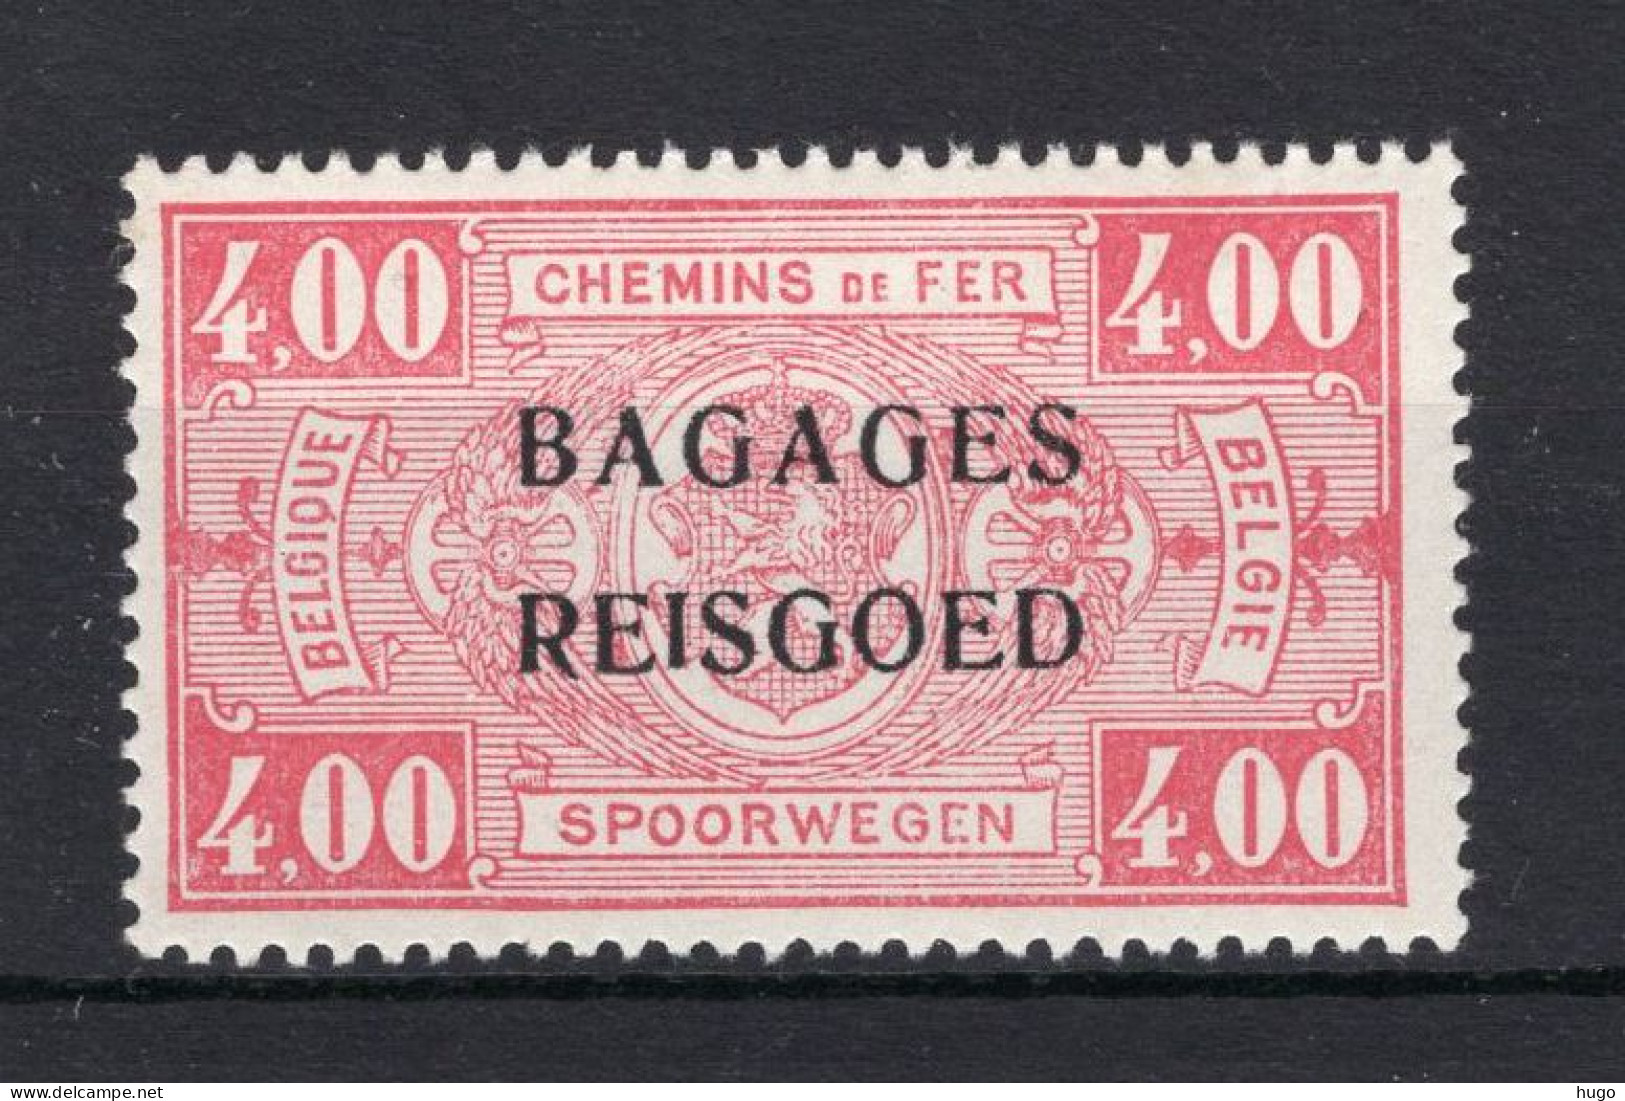 BA13 MNH** 1935 - Spoorwegzegels Met Opdruk "BAGAGES - REISGOED" - Sot  - Bagages [BA]